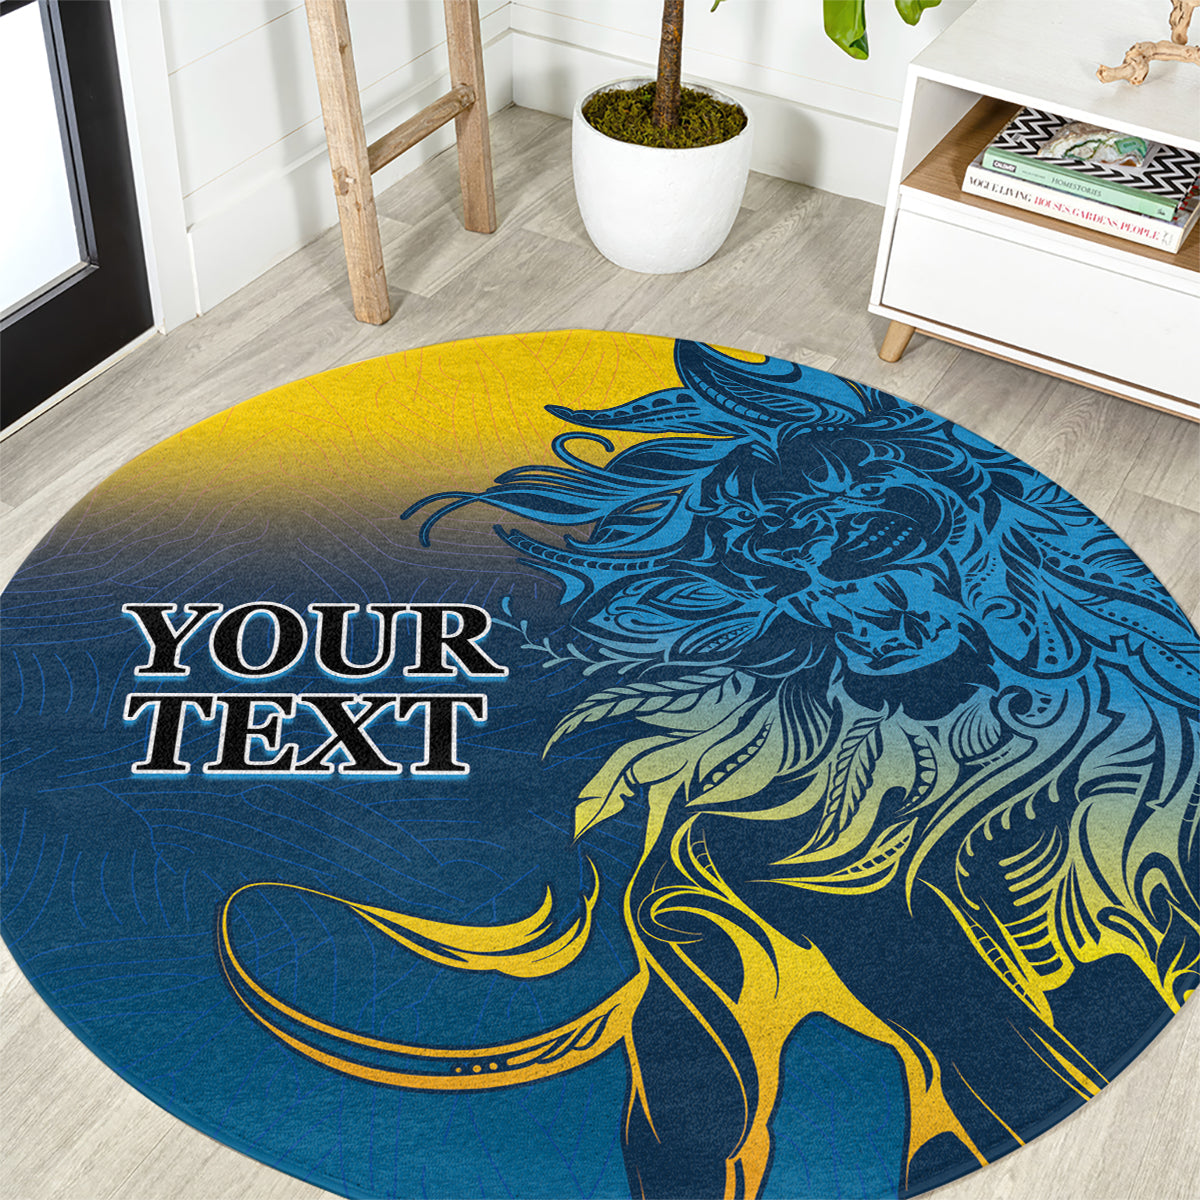 Sri Lanka Round Carpet With Lions Version